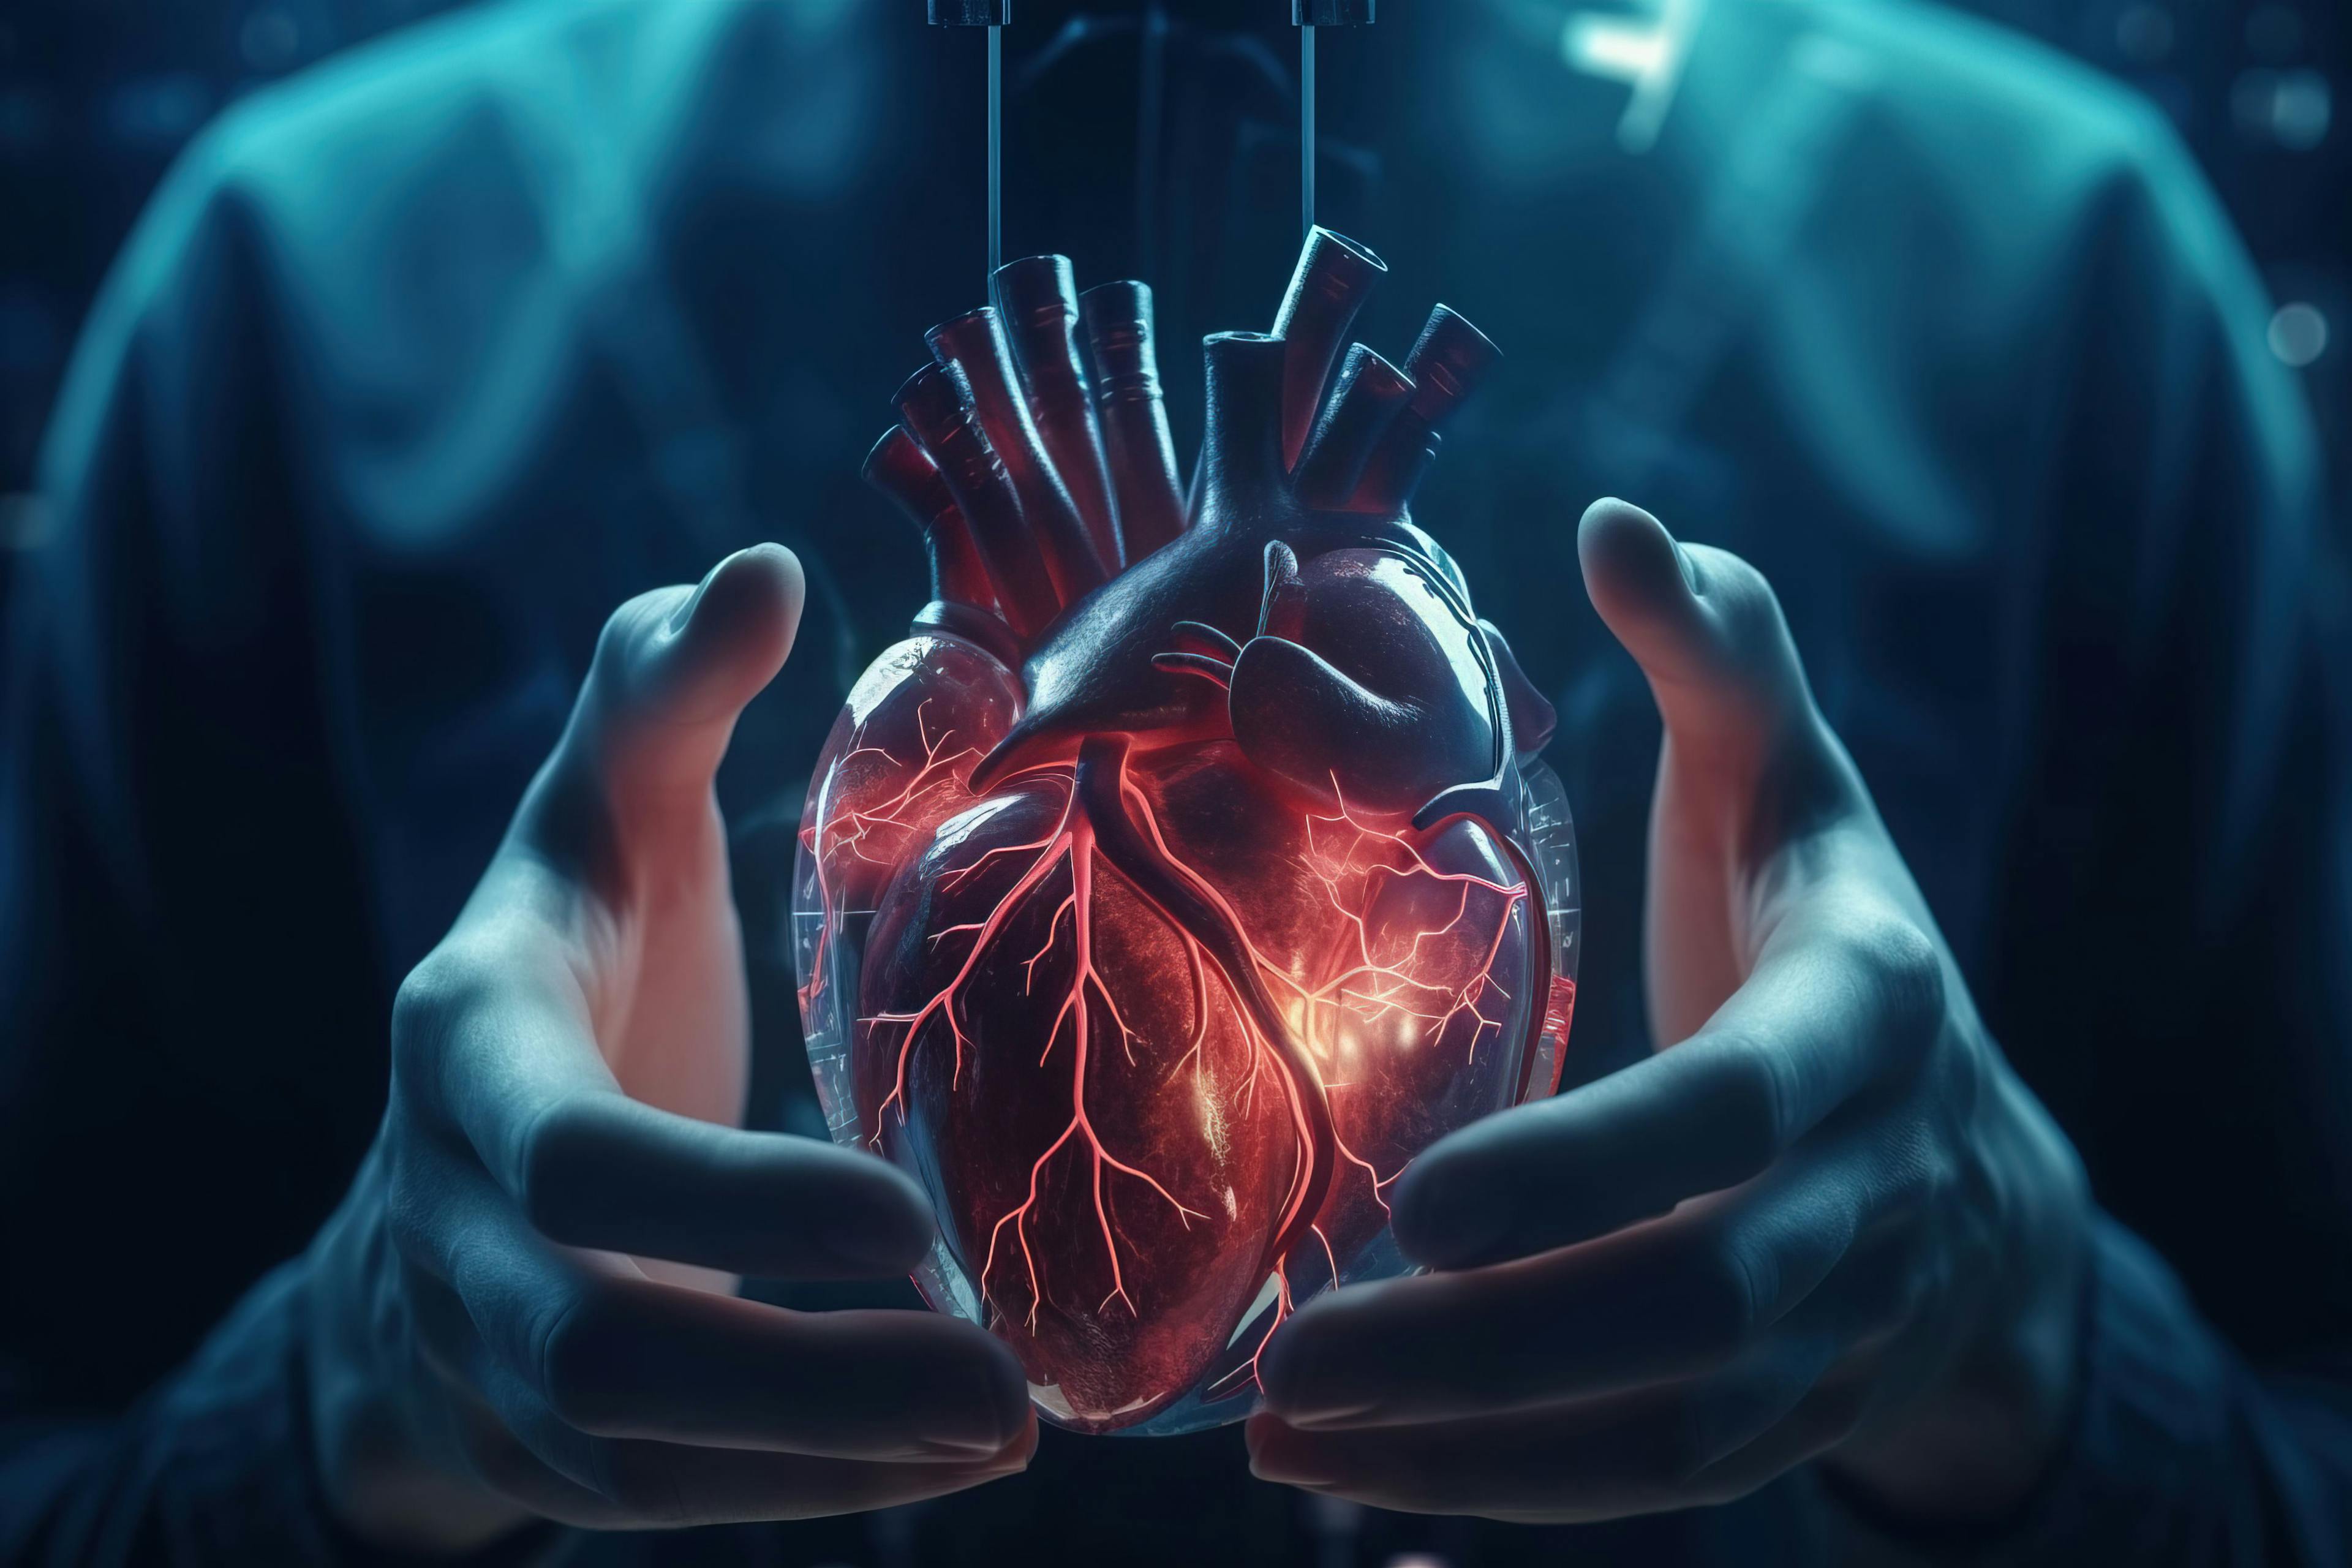 Glowing human heart in hands | Image Credit: IBEX.Media - stock.adobe.com